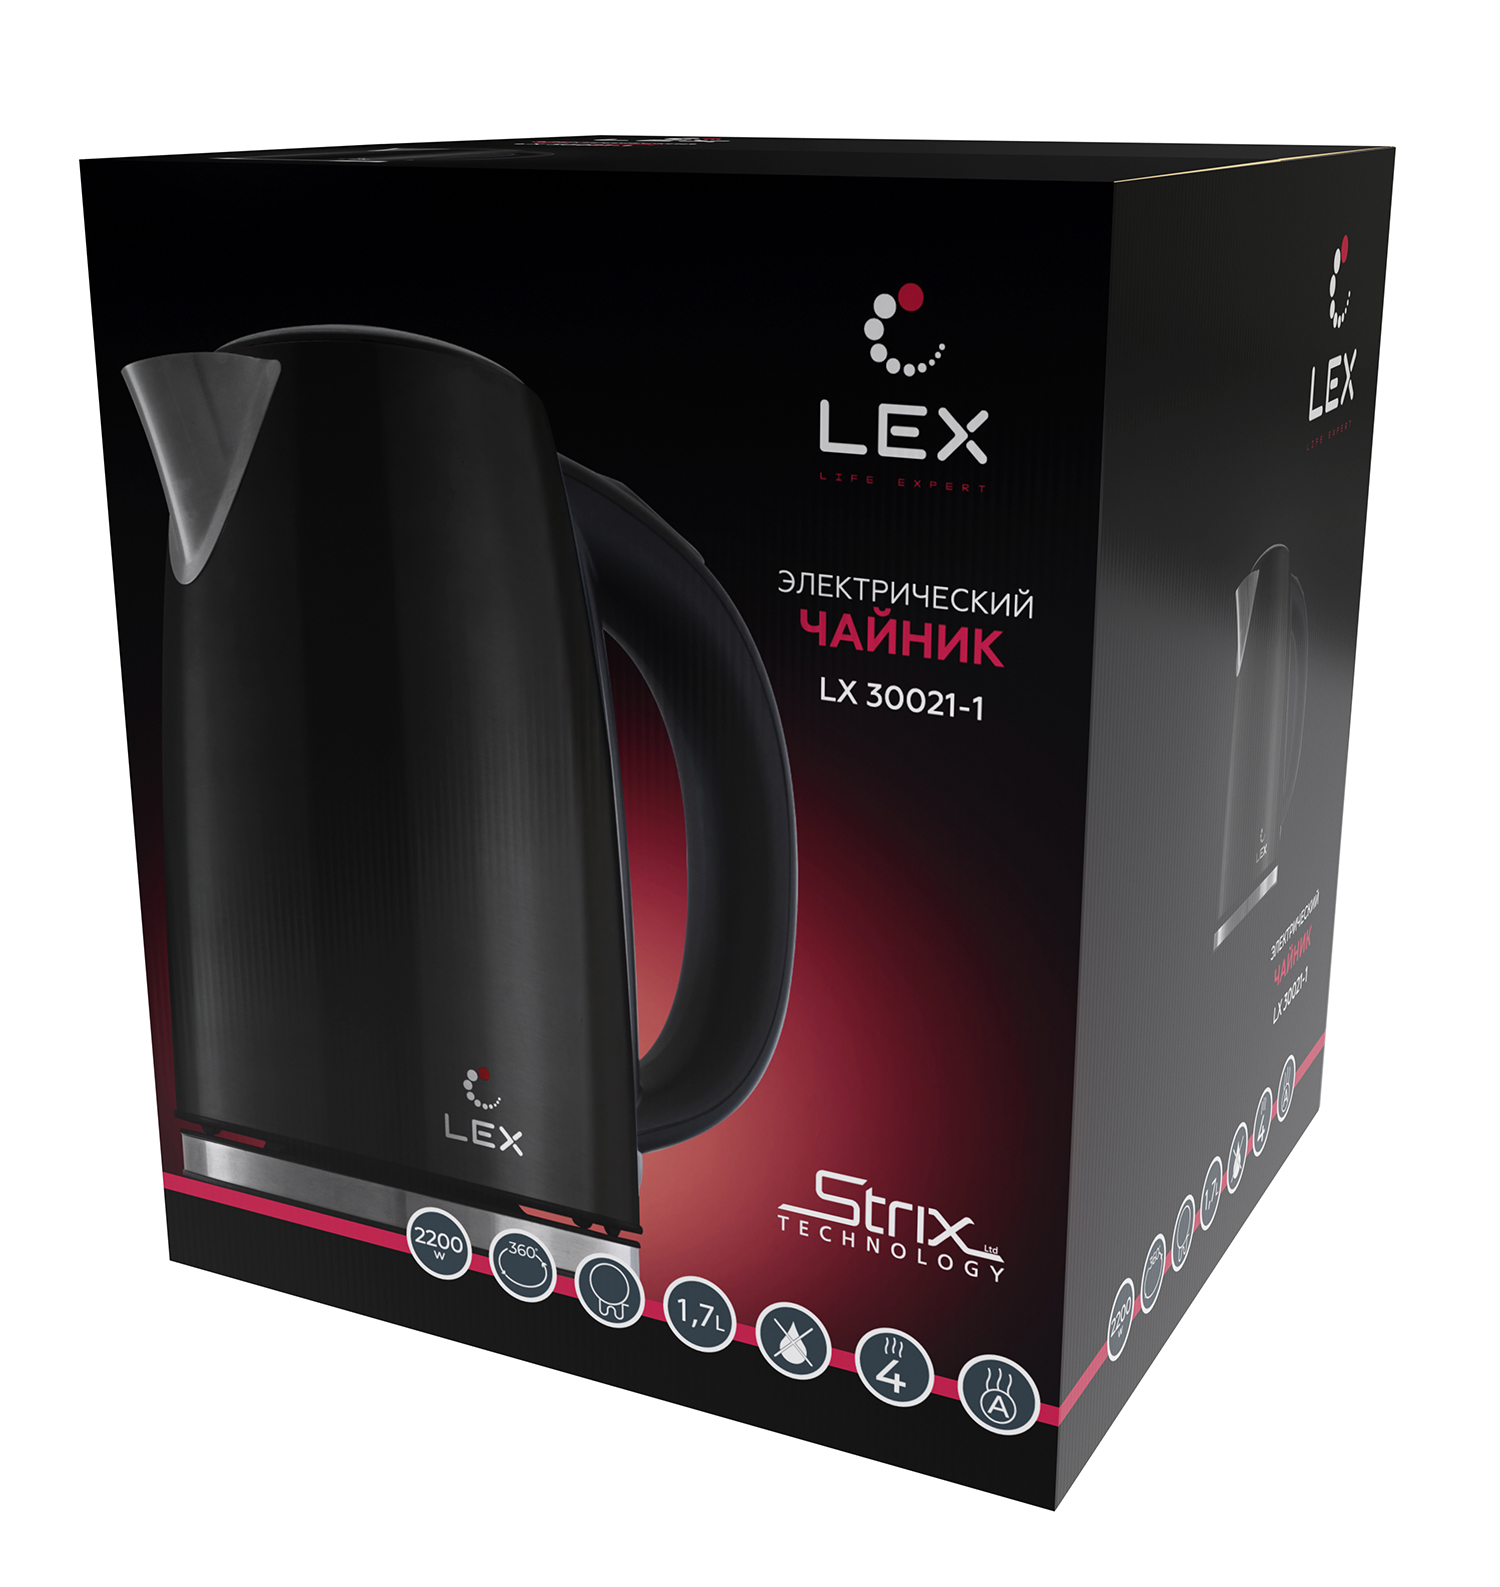 LEX LX 30021-1